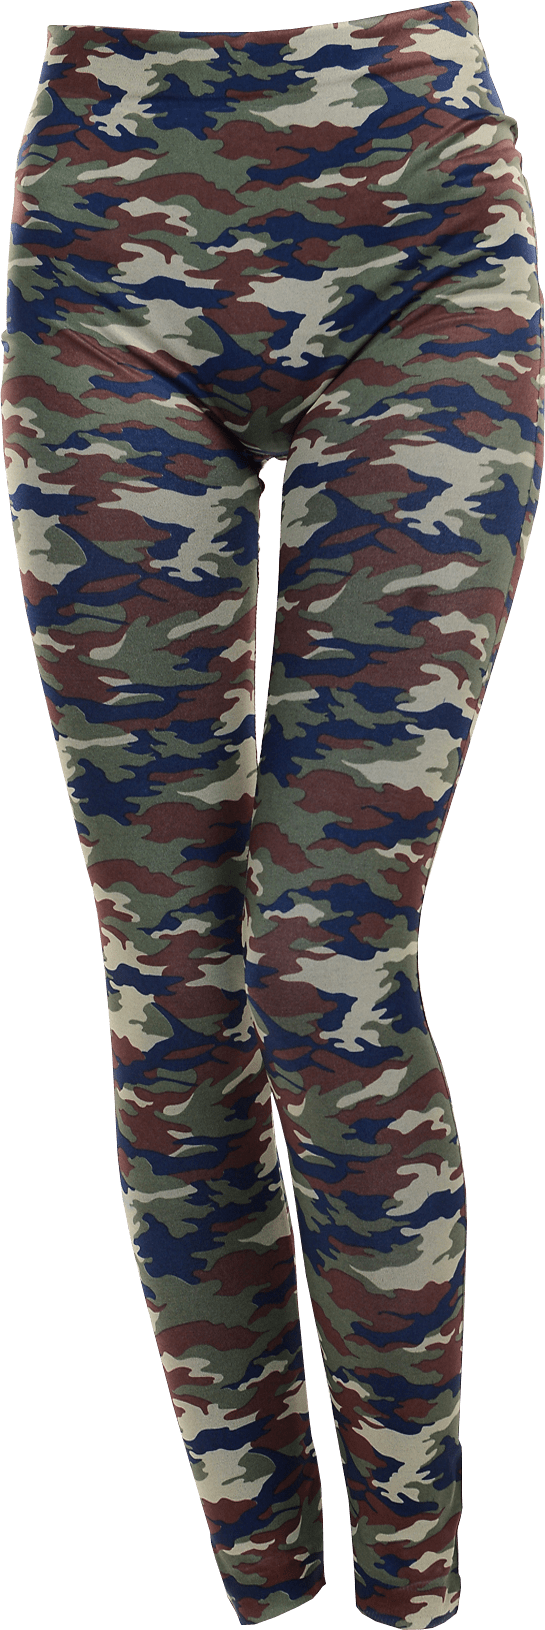 Legging camouflage